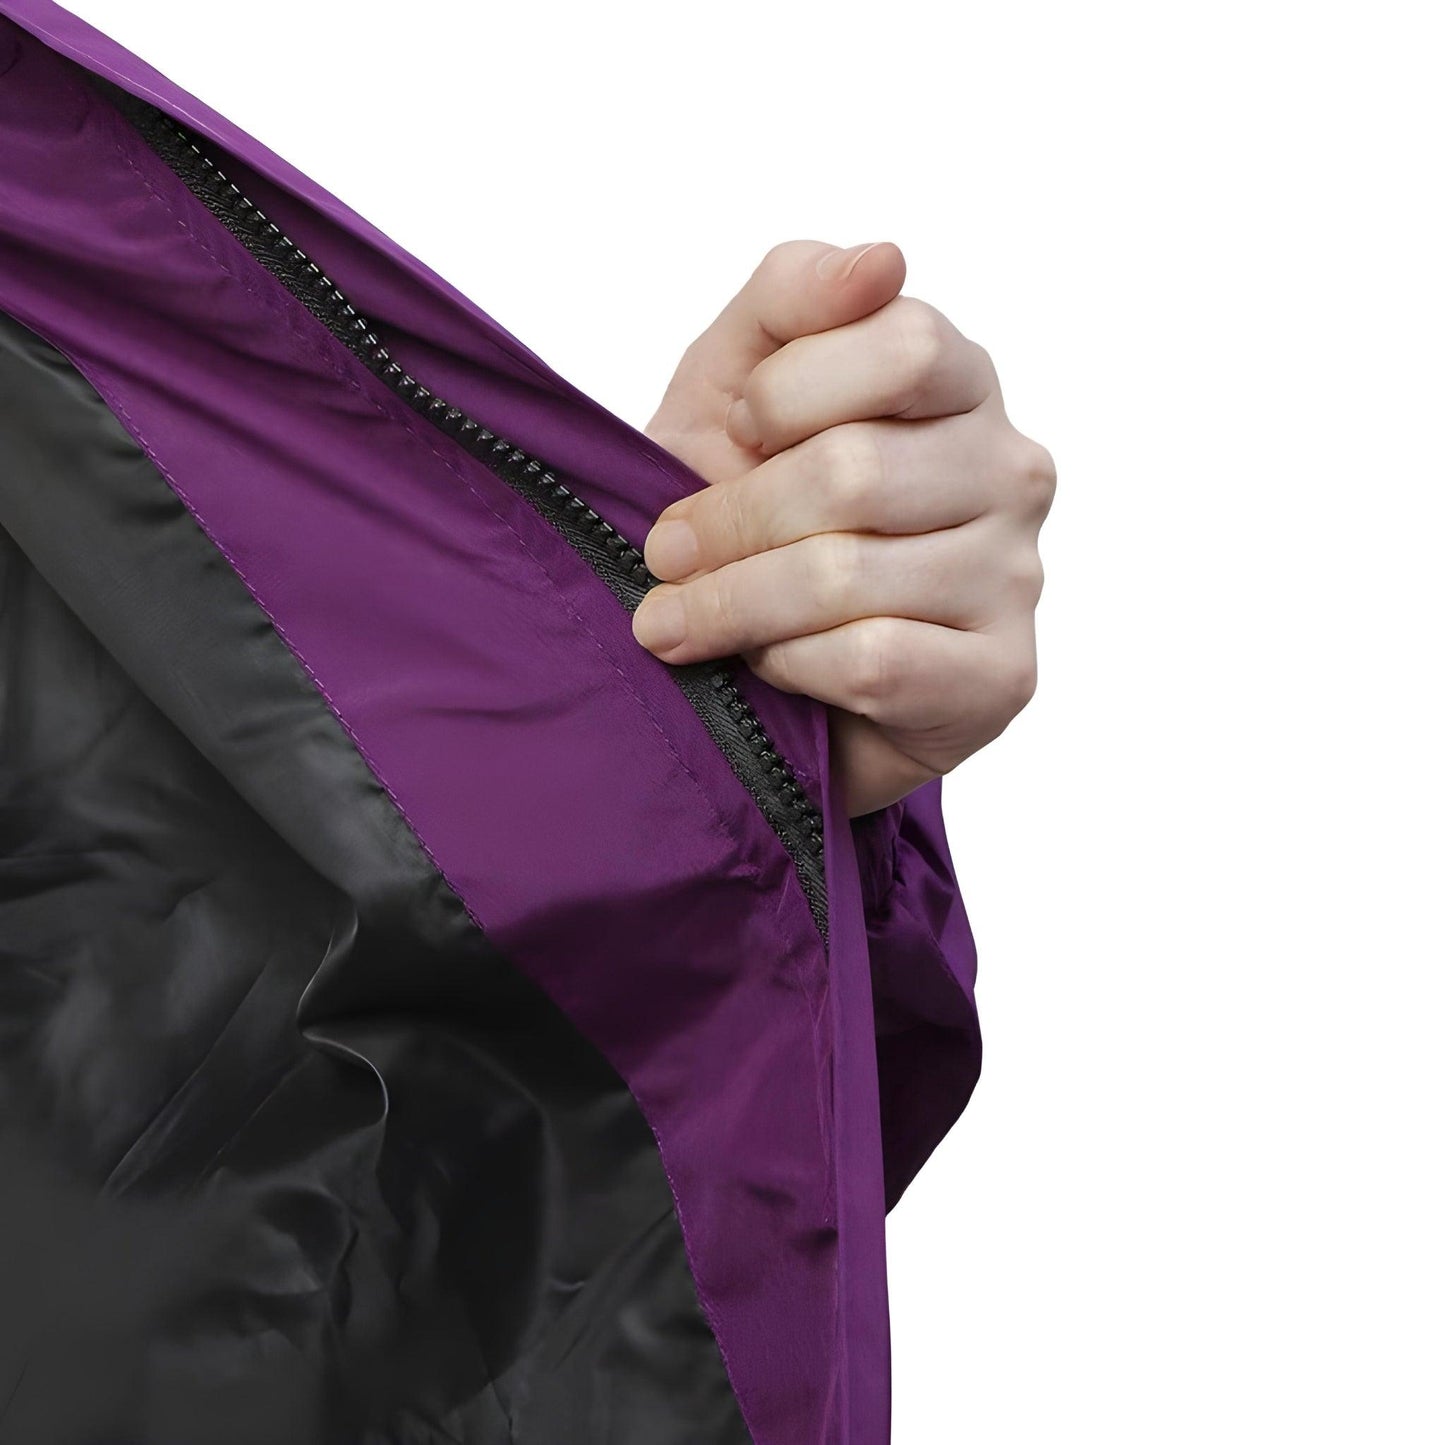 YOUTH ROBE Women's Knee-length Solid Raincoat (Dark Purple)